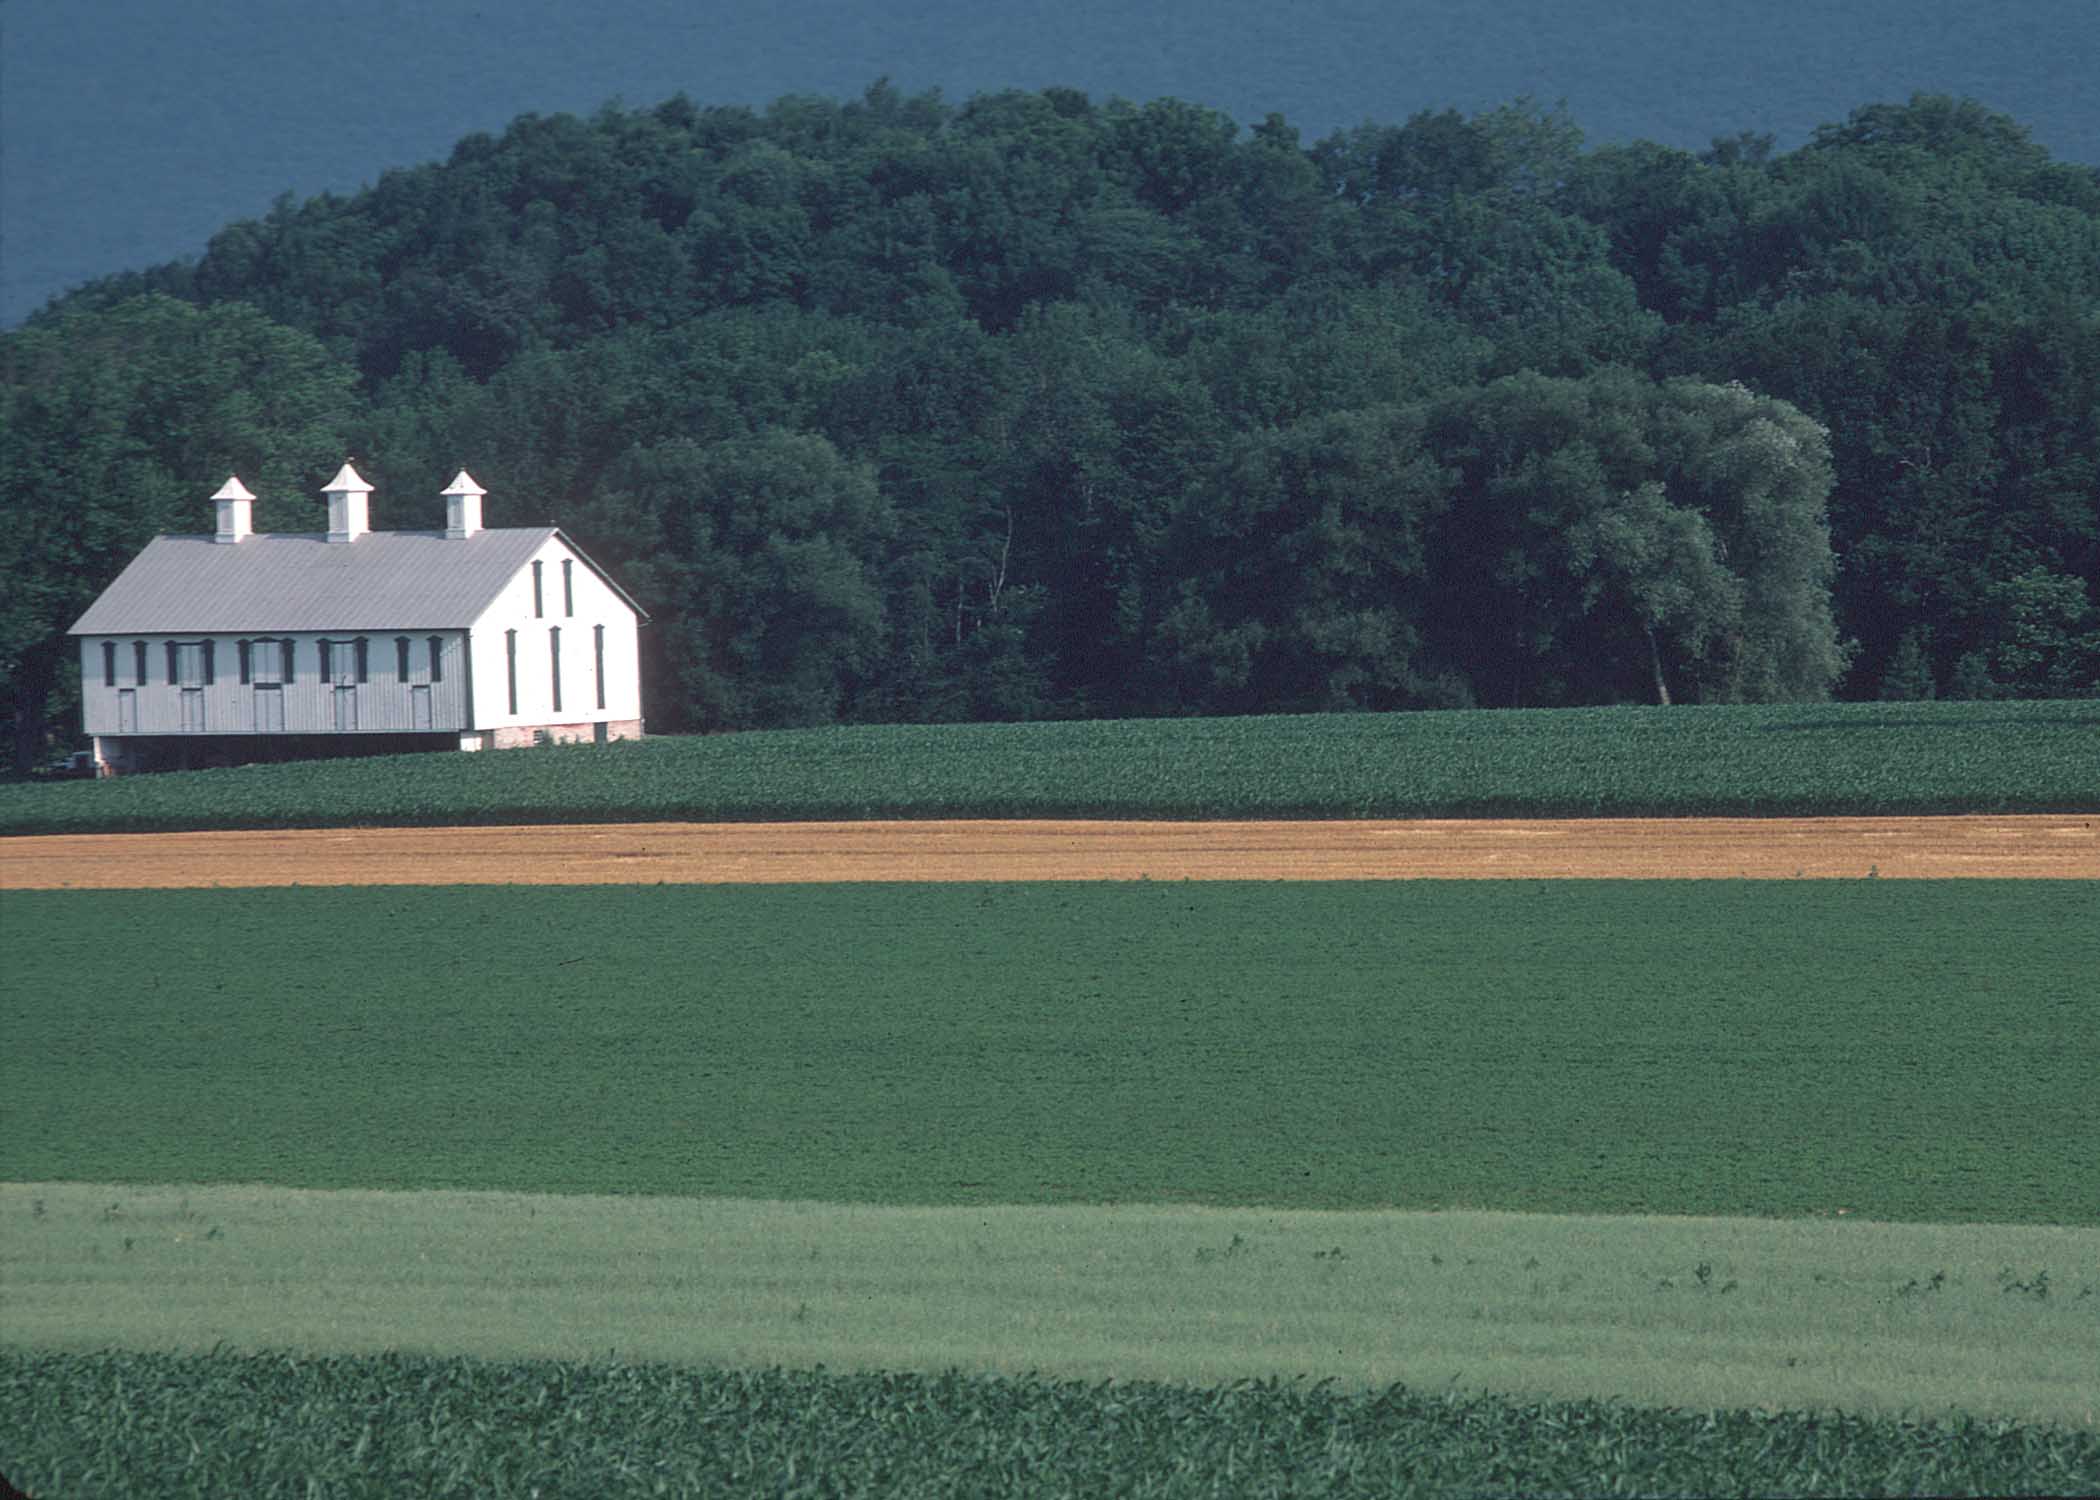 Pennsylvania Farm